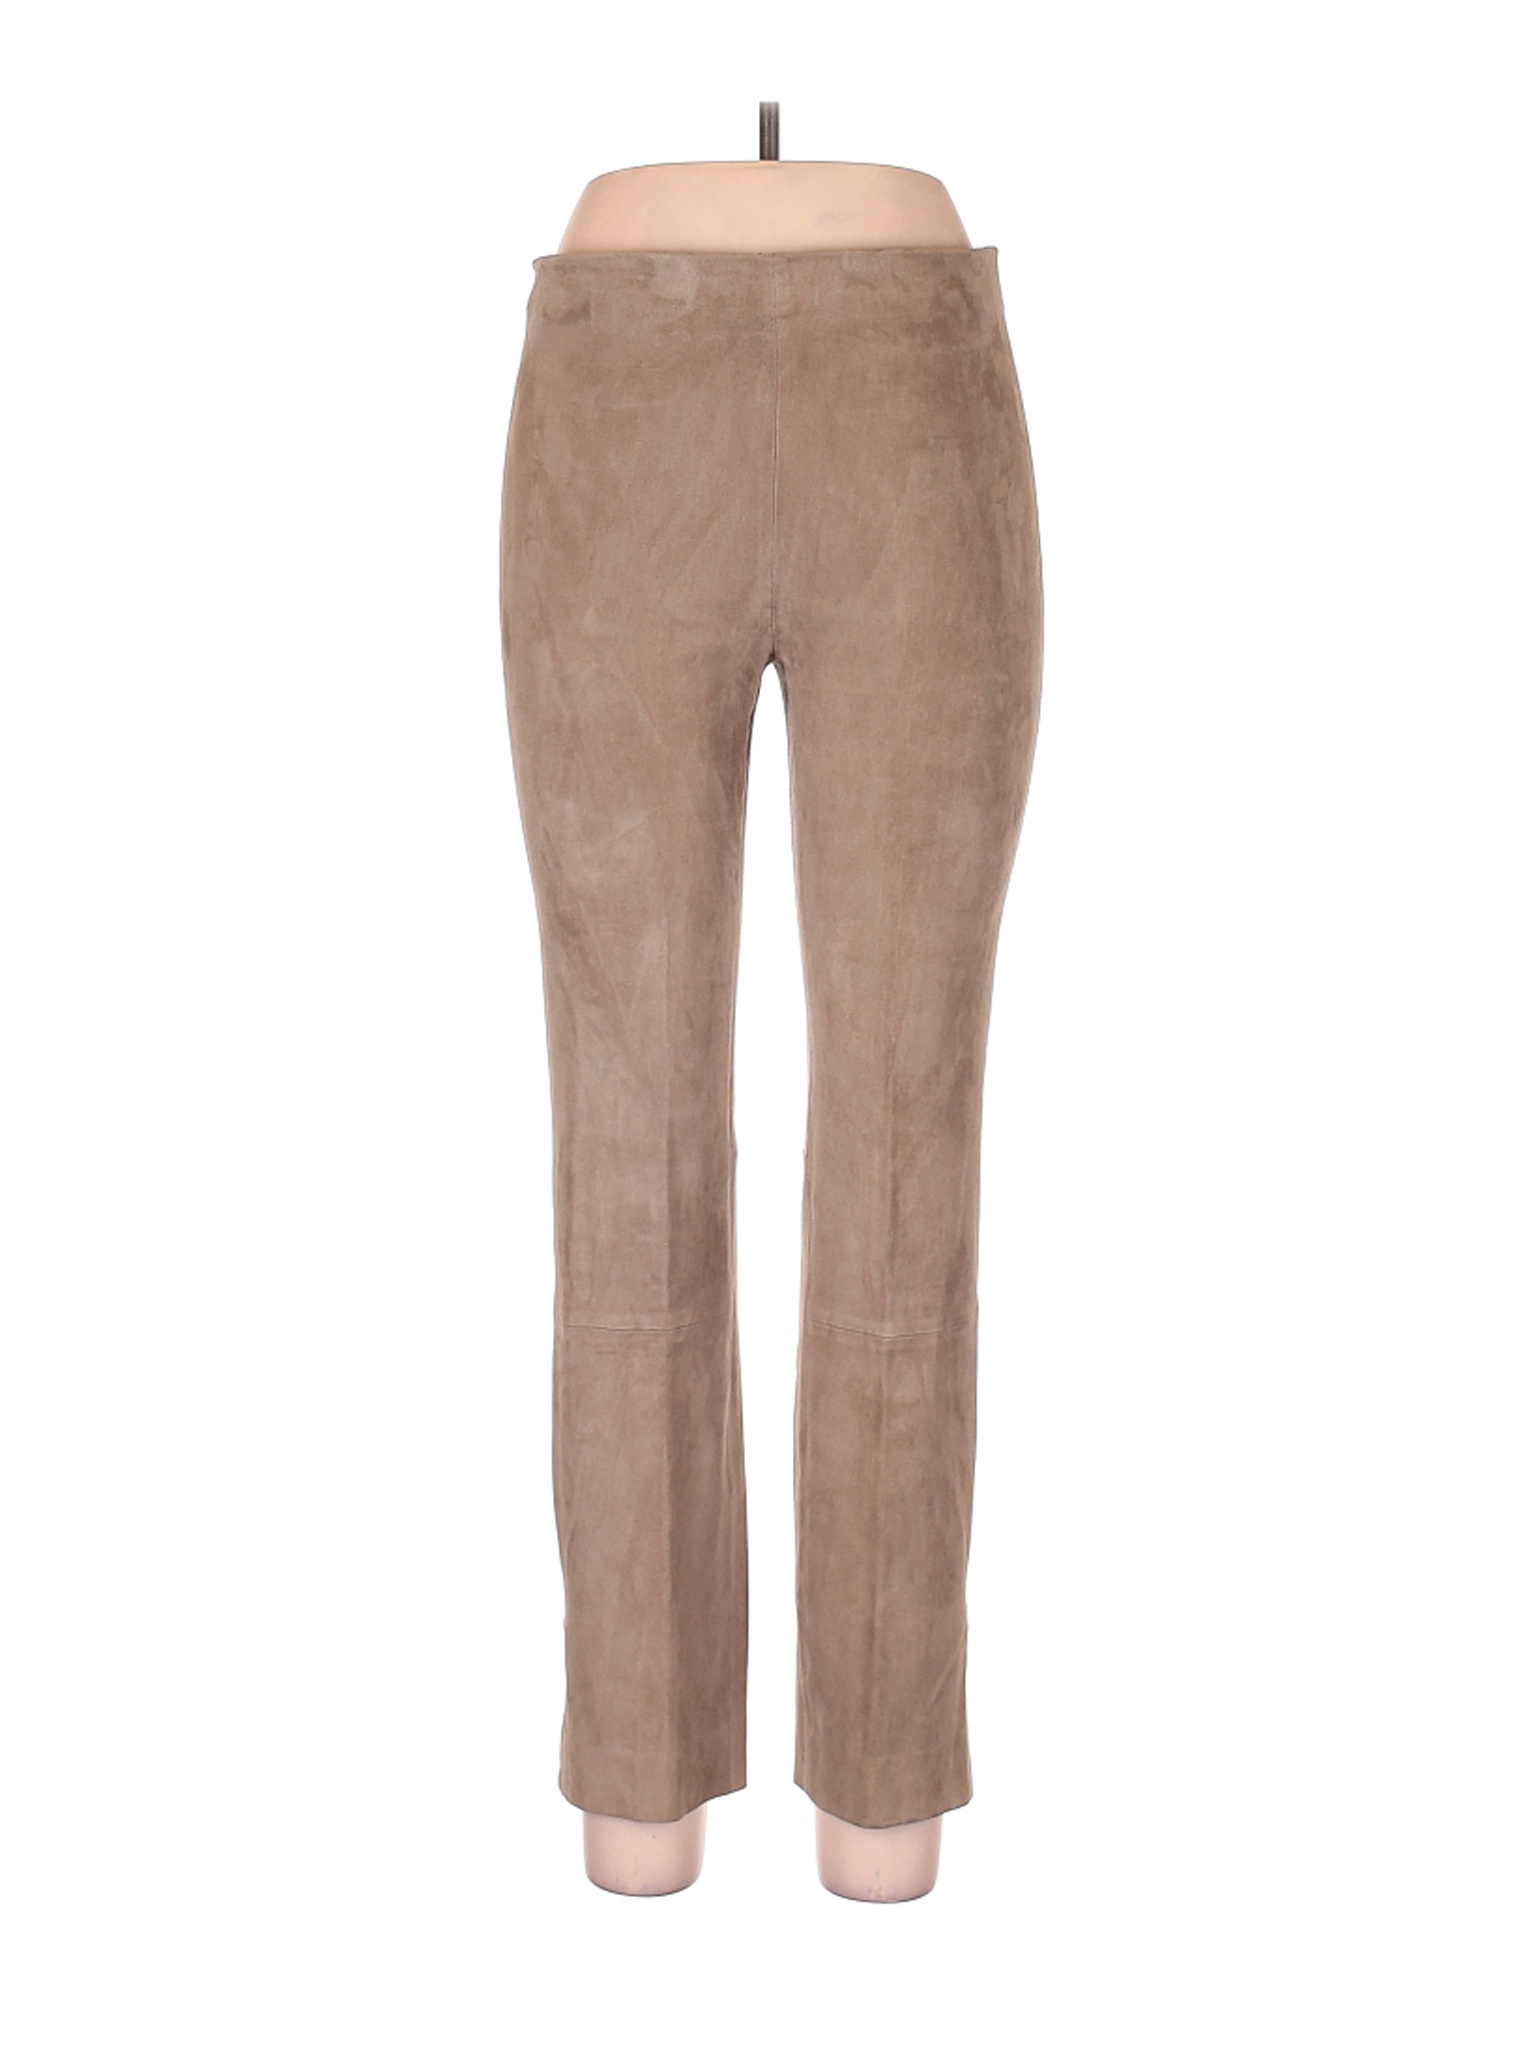 Vince. Women Brown Leather Pants L | eBay